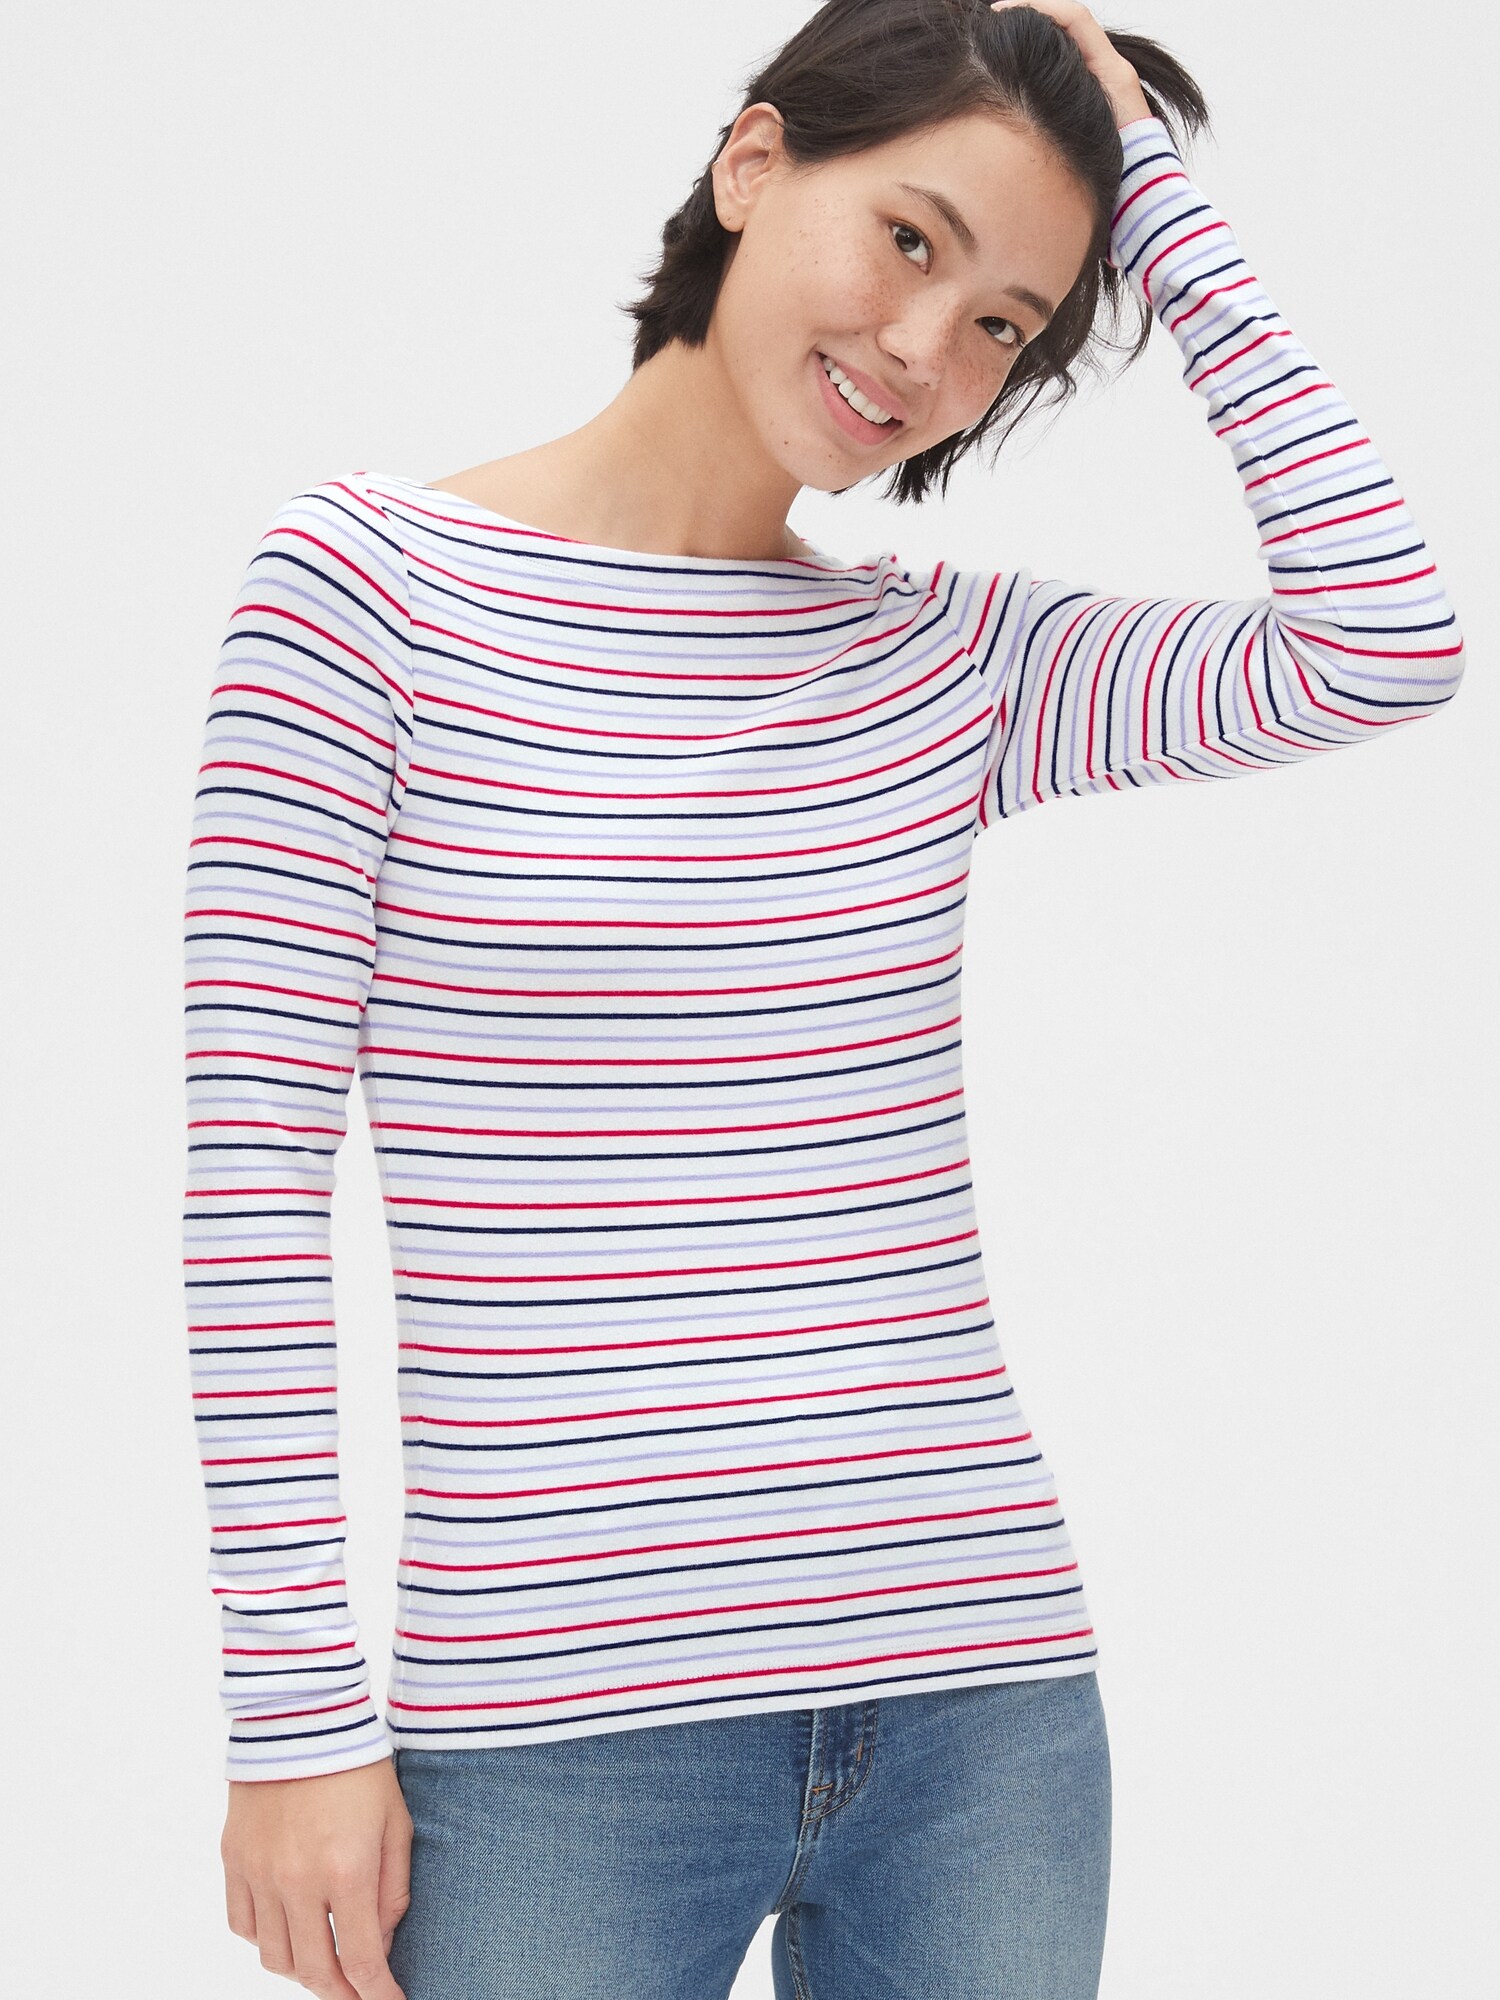 NWT GAP Modern Long Sleeve Boatneck T-Shirt Tee Shirt Pink Stripe Women XS S 